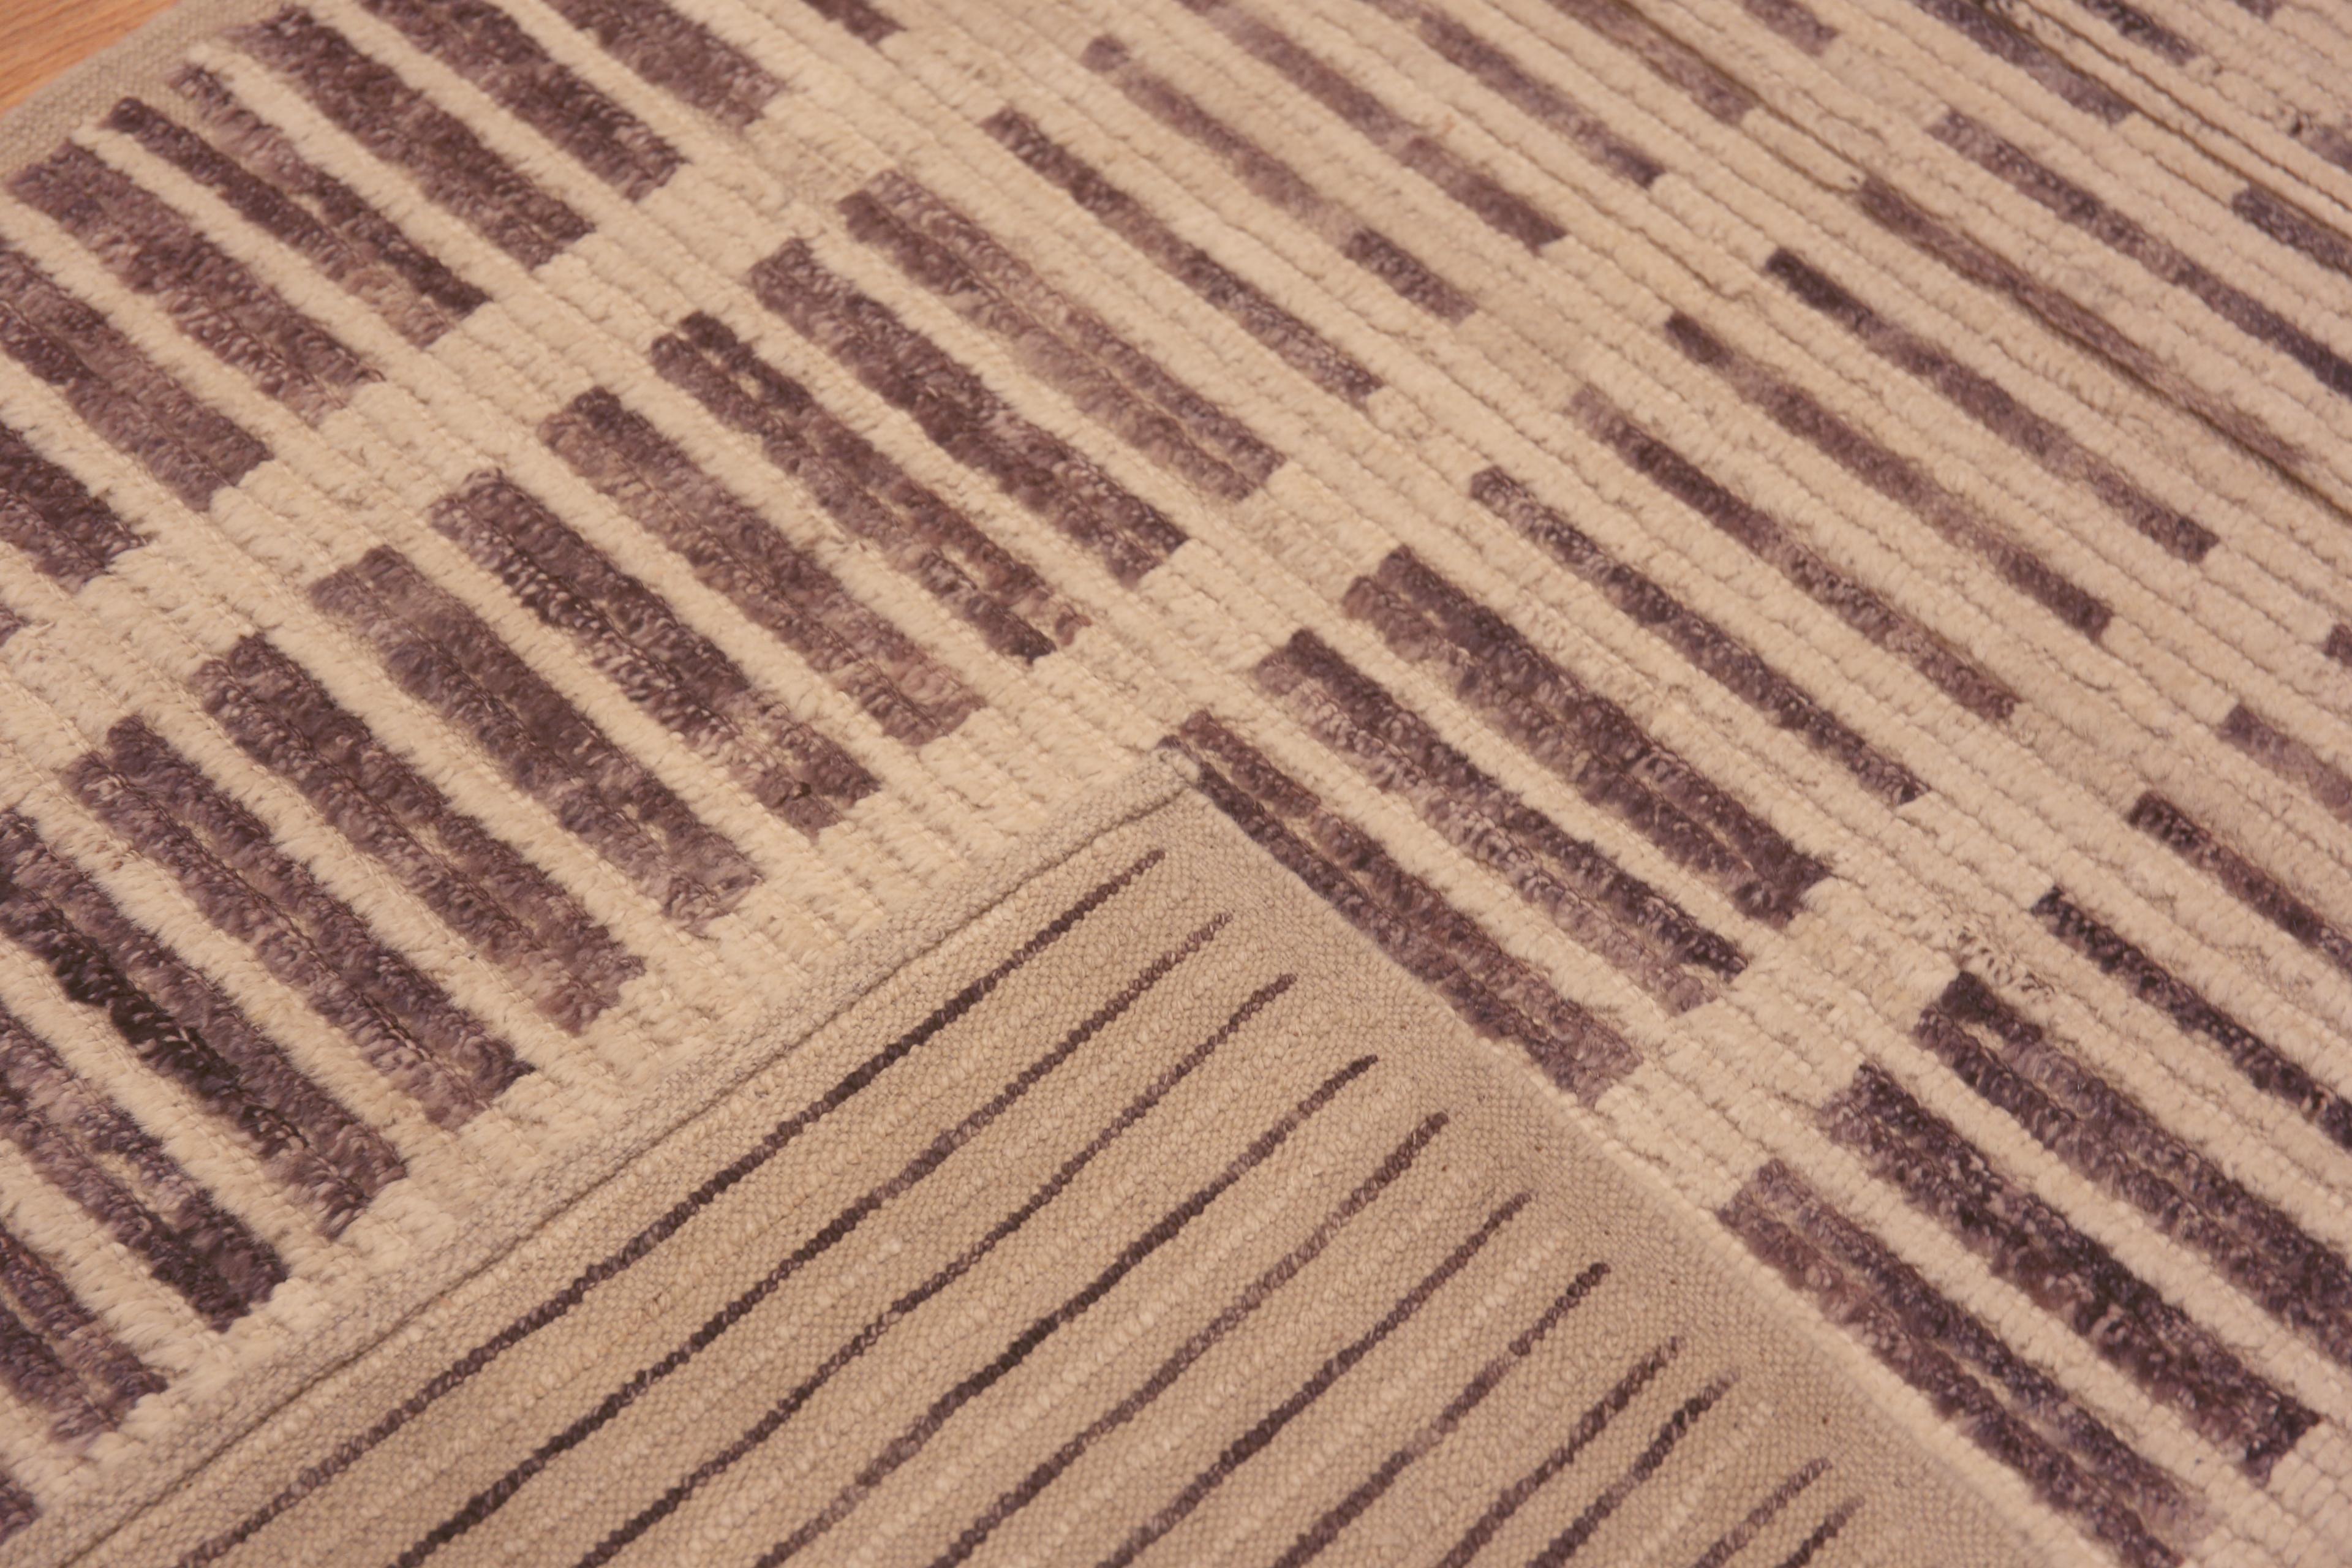 Wool Nazmiyal Collection Tribal Geometric Modern Hallway Runner Rug 3'4